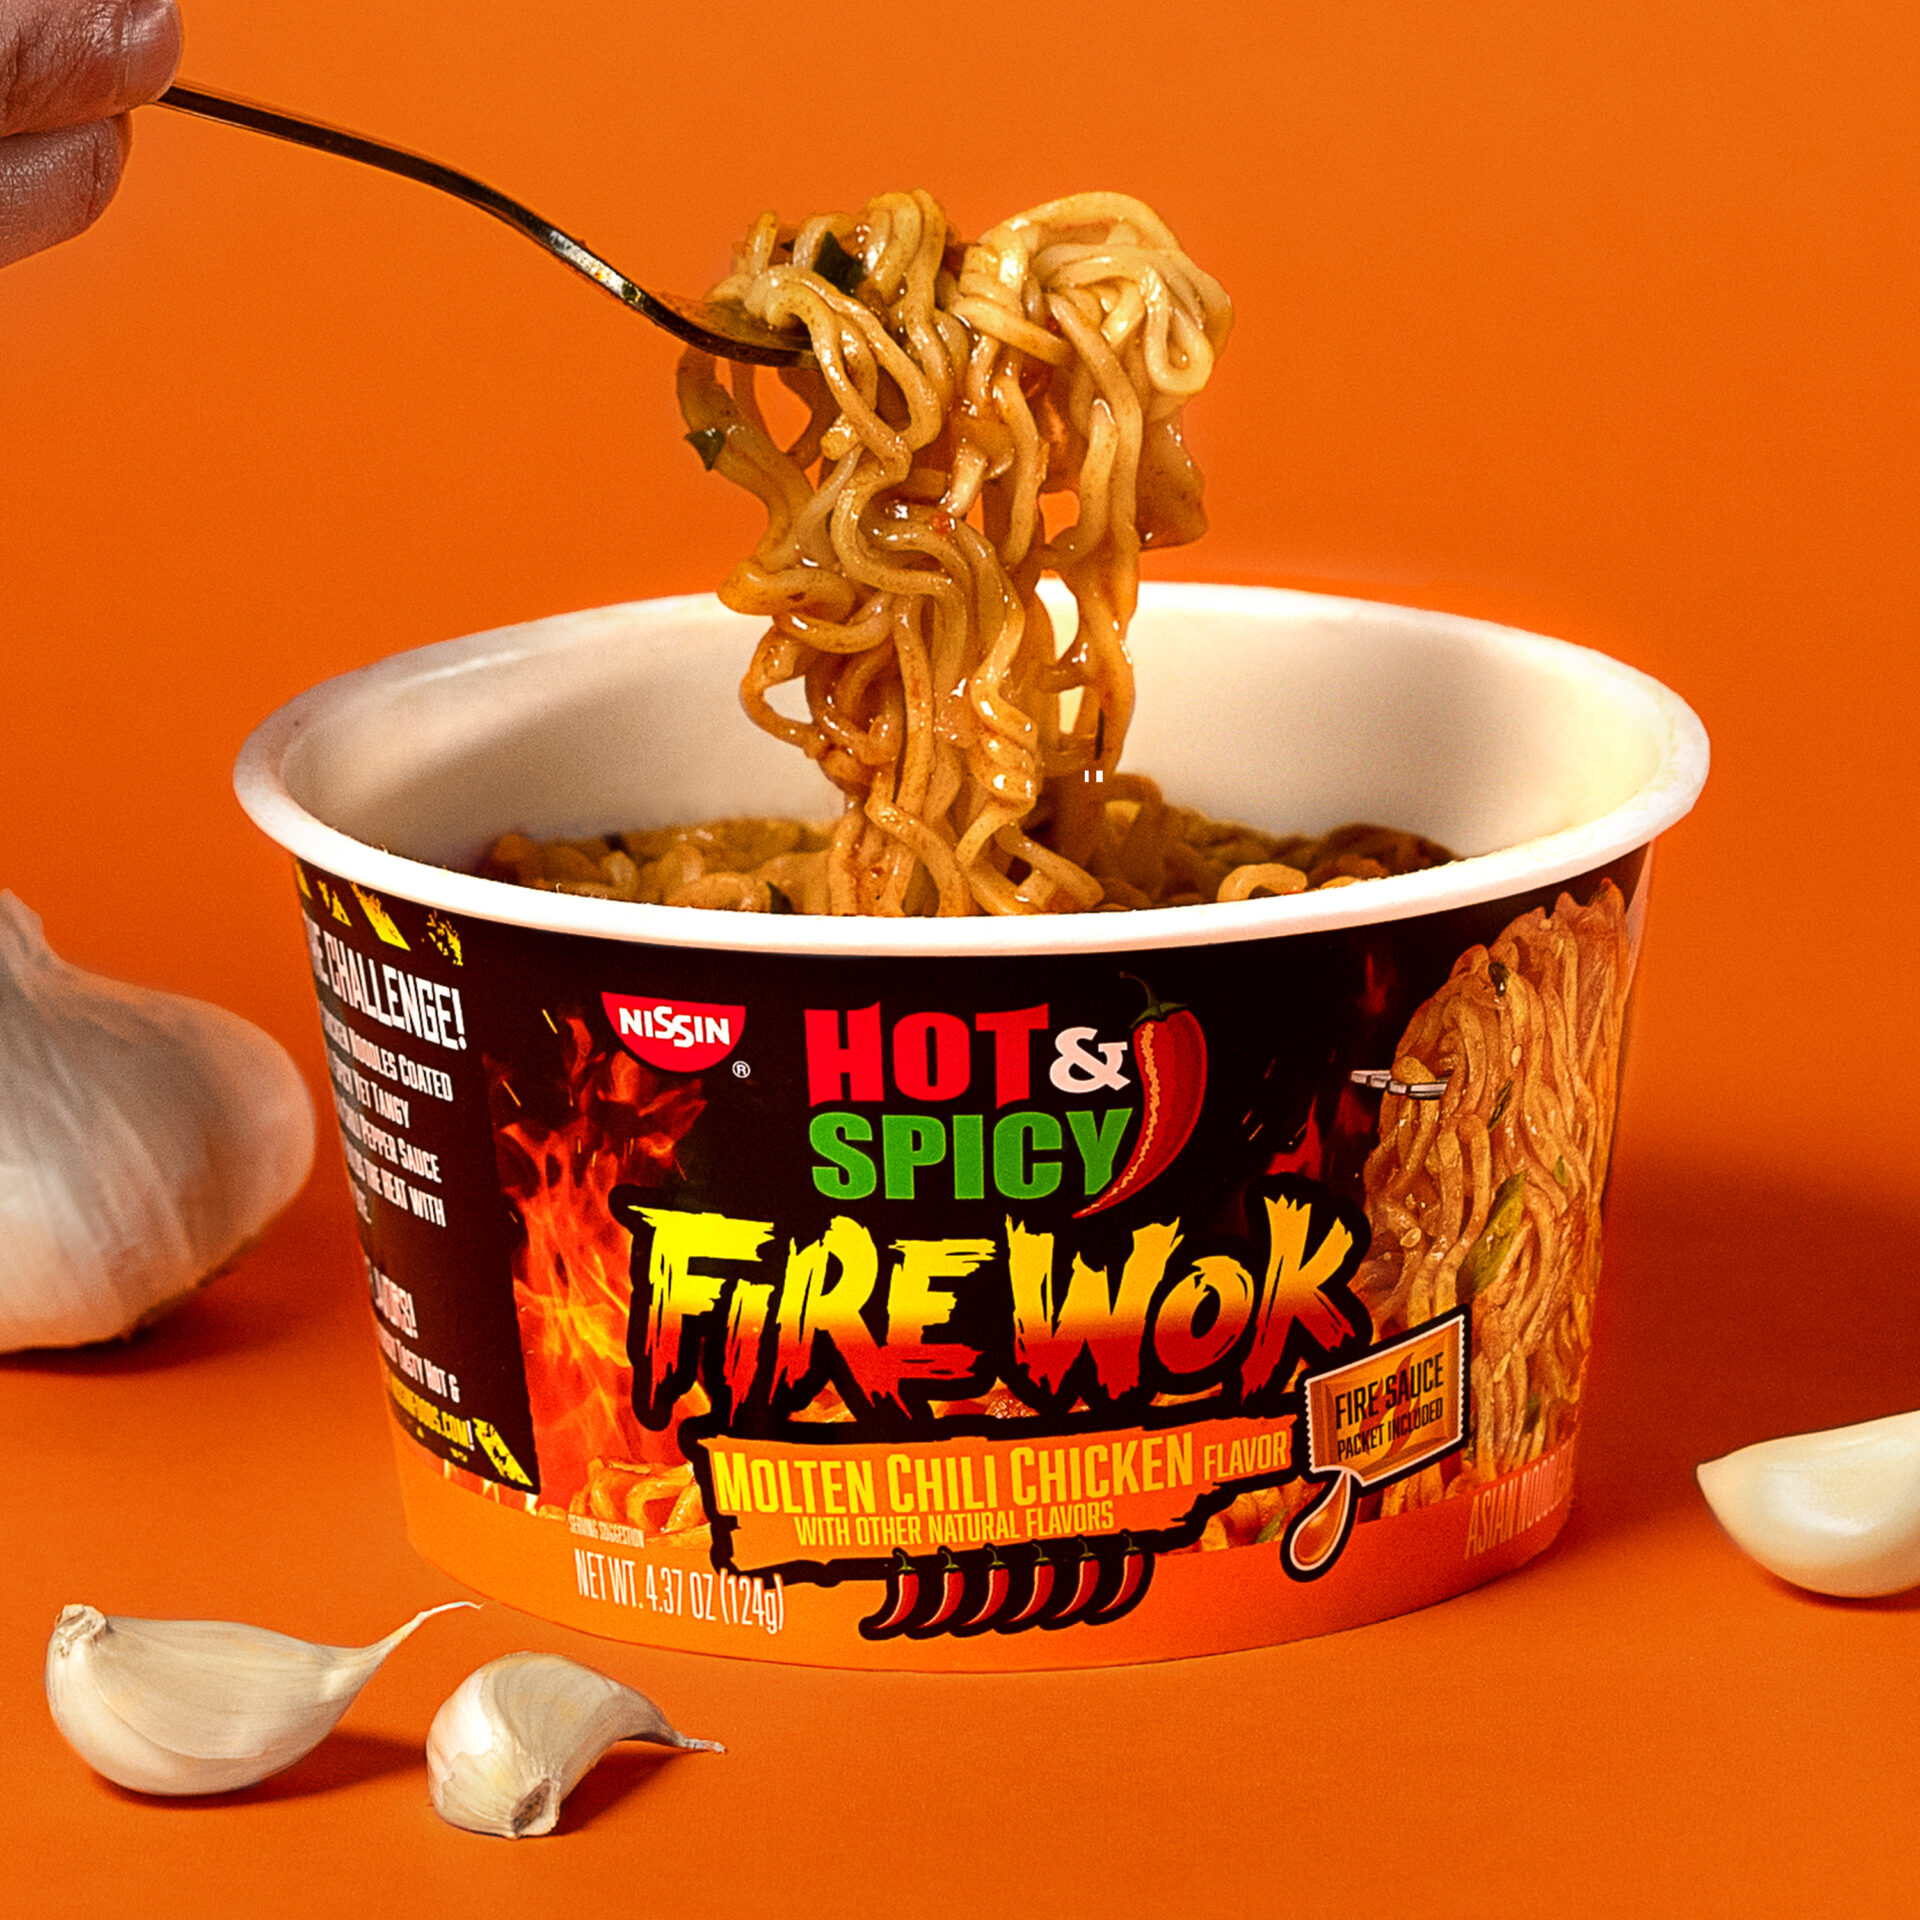 Cup Noodles Stir Fry Fiery Korean Chicken - Nissin Food